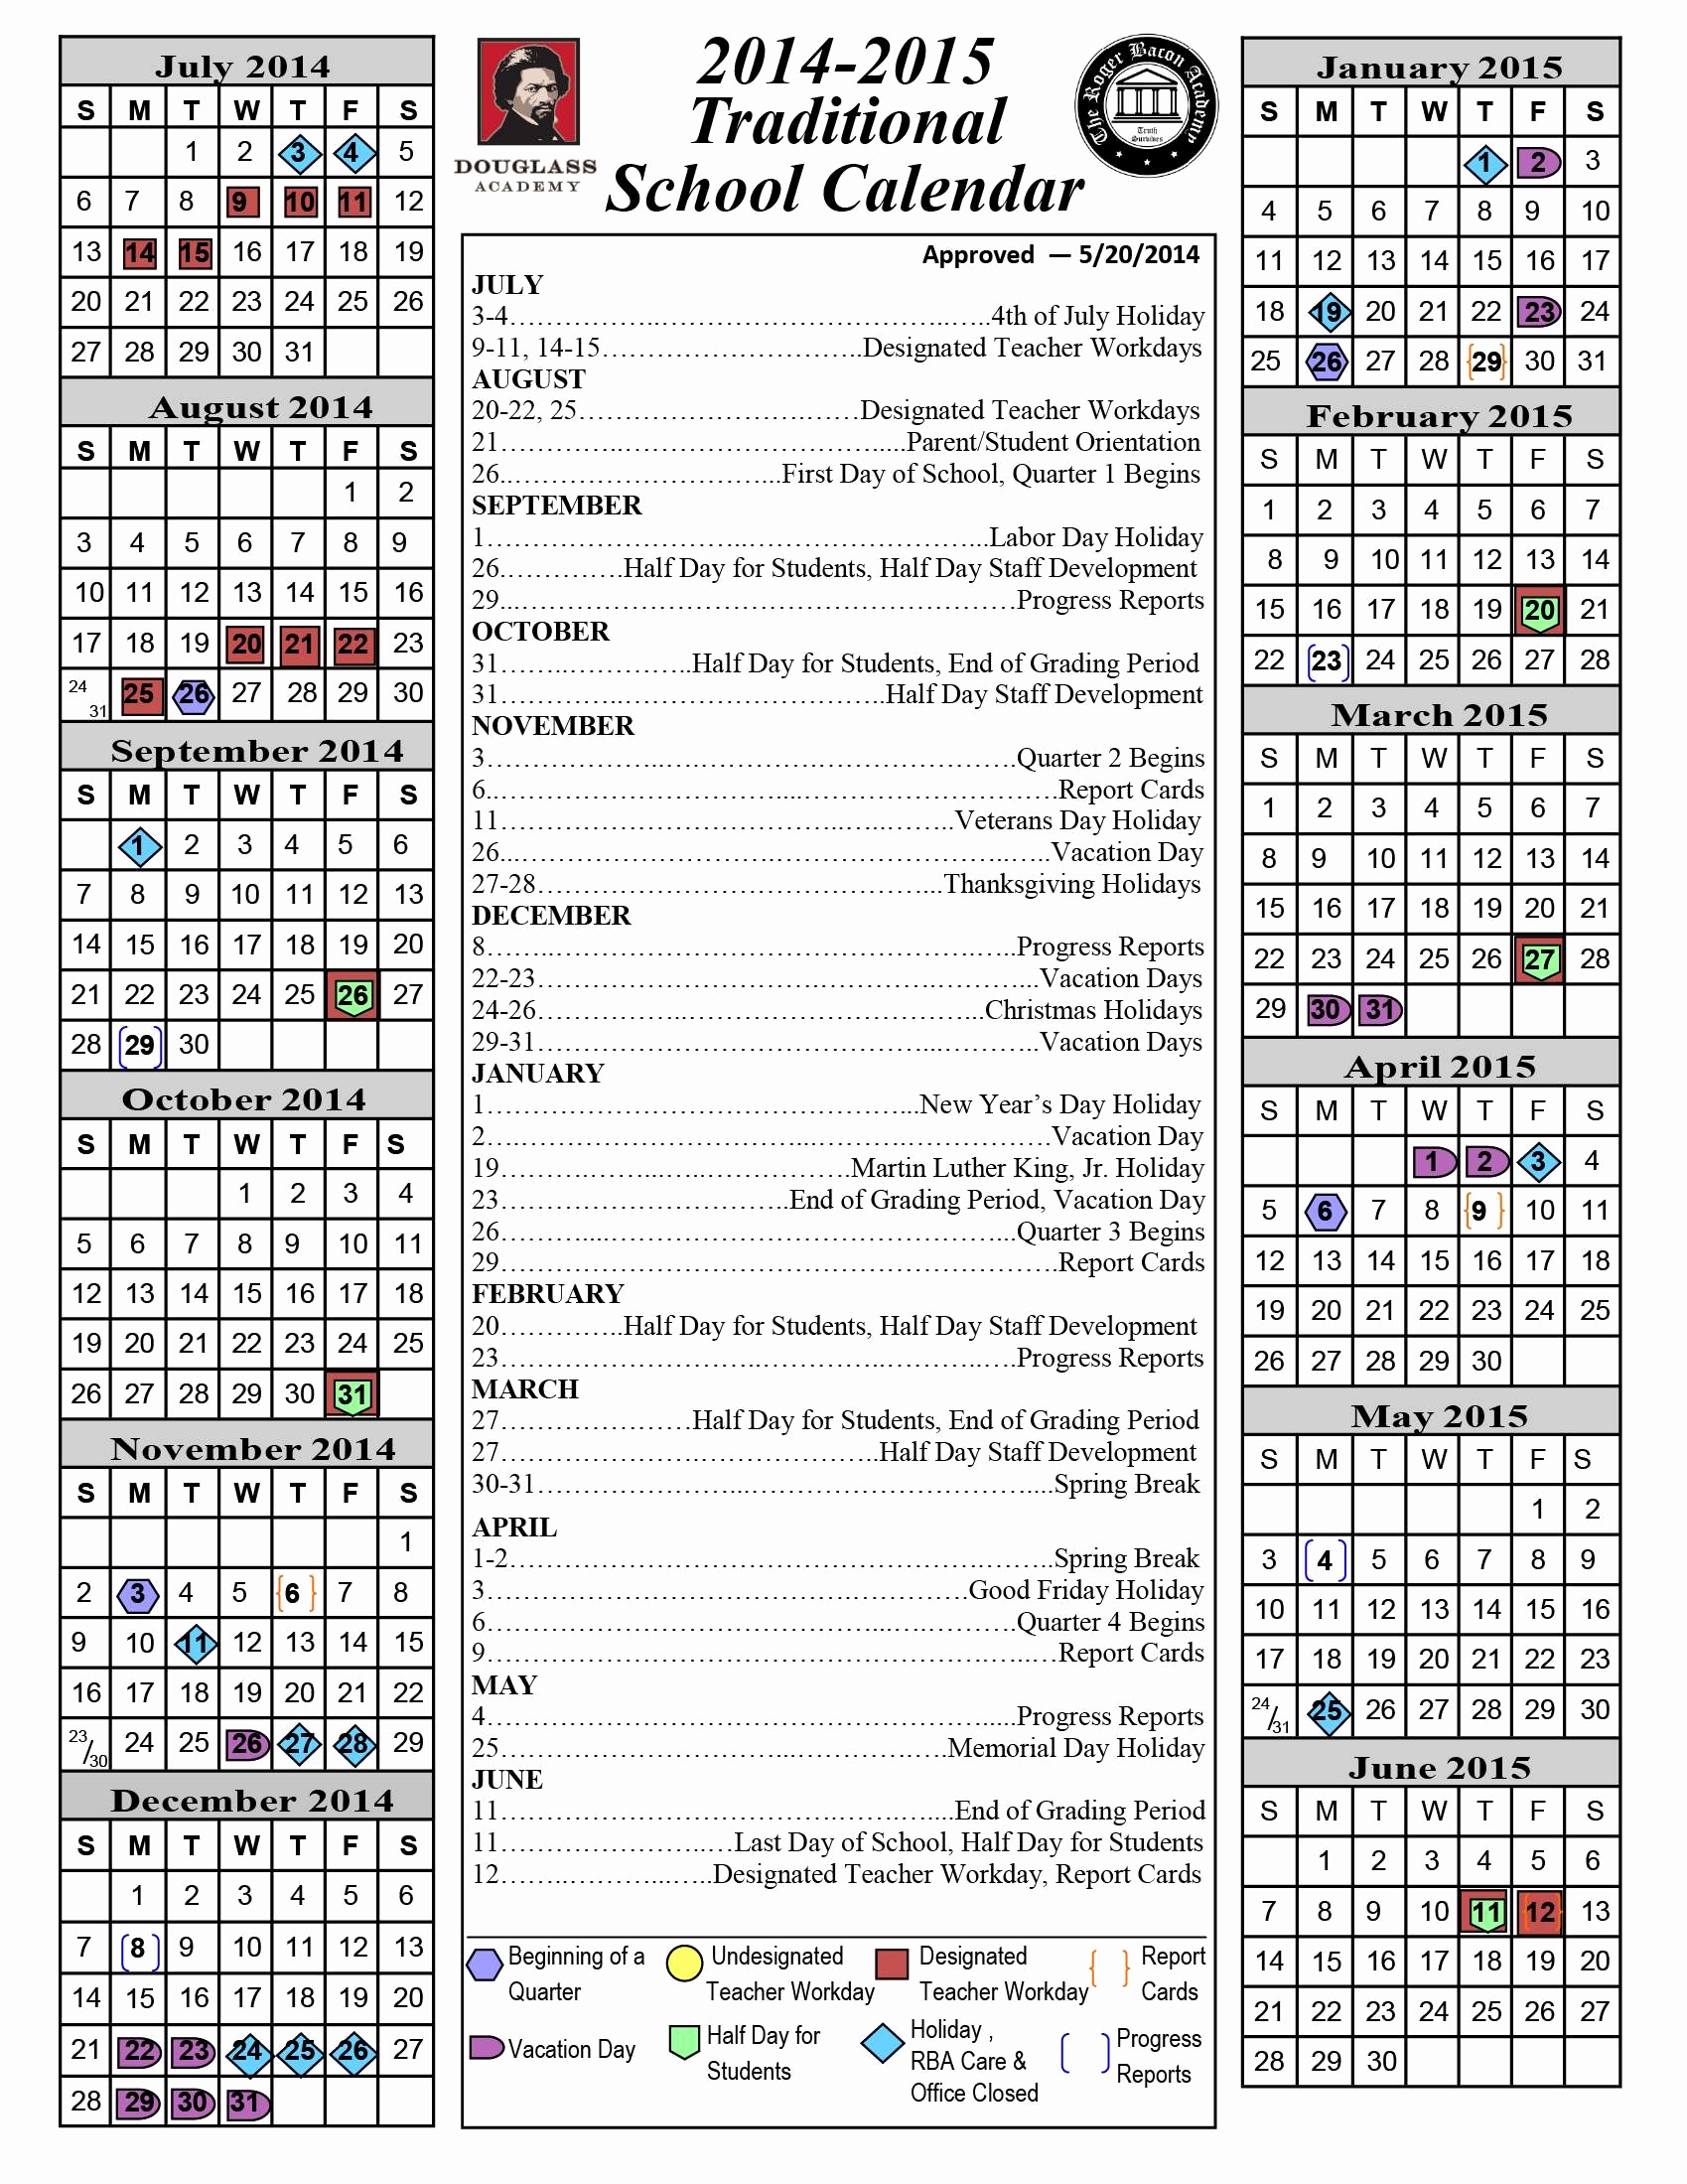 Sccc Calendar Customize and Print